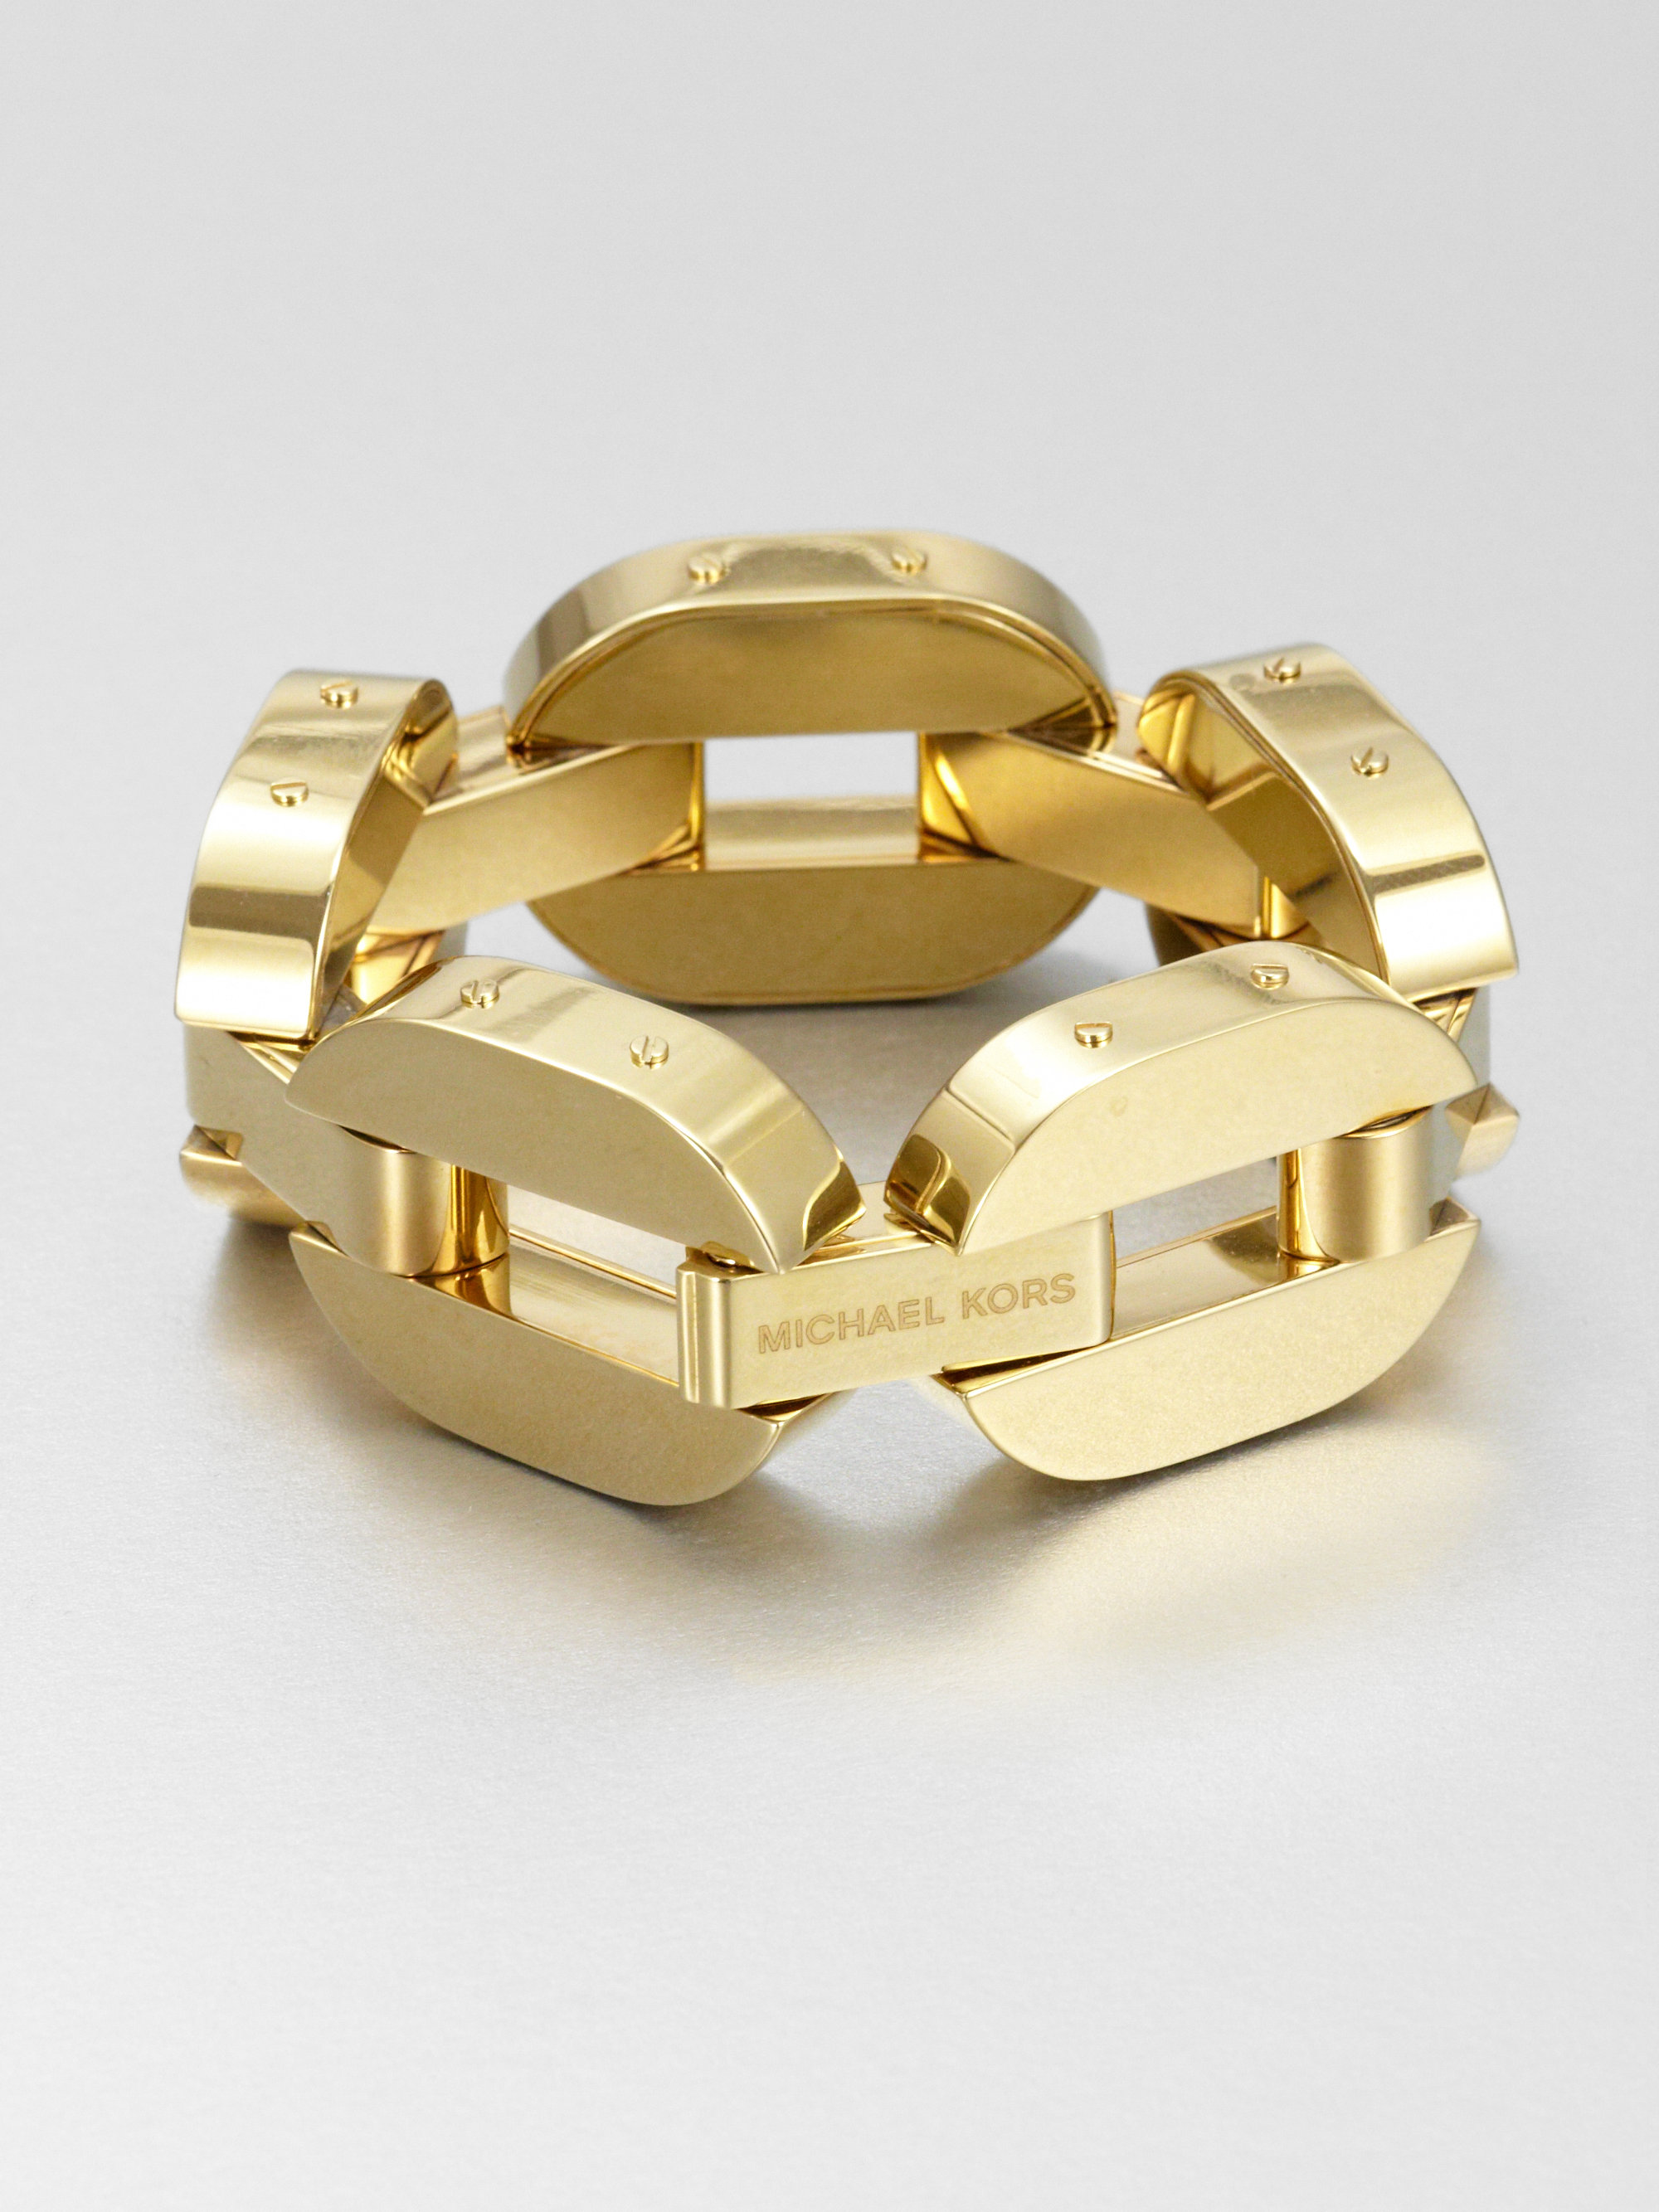 Michael Kors Drama Chain Link Bracelet in Gold (Metallic) - Lyst